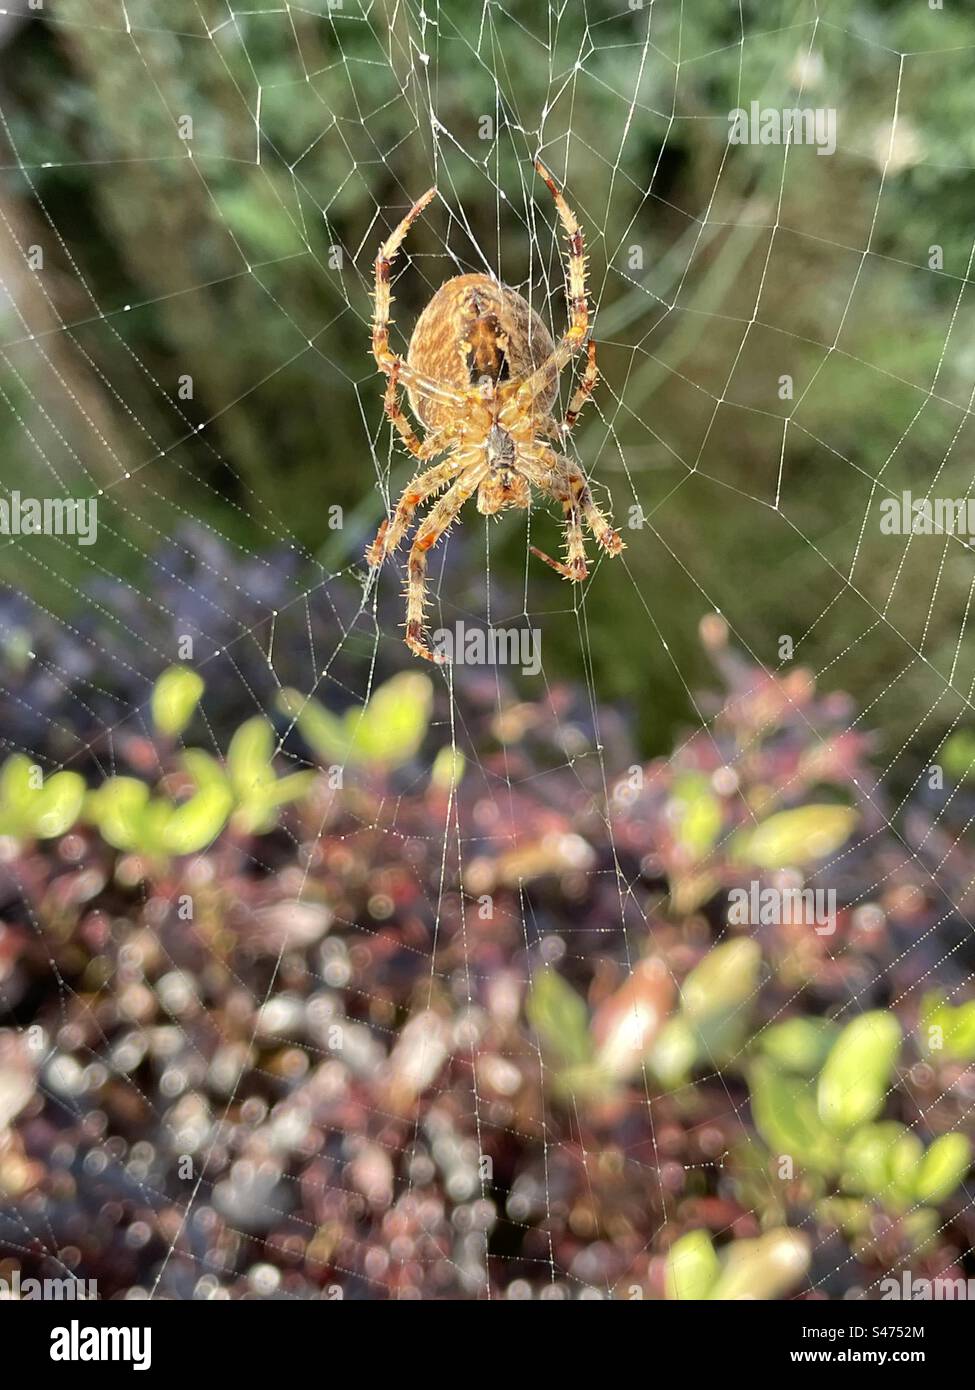 Garden spider (Araneus diadematus) in its web. Stock Photo